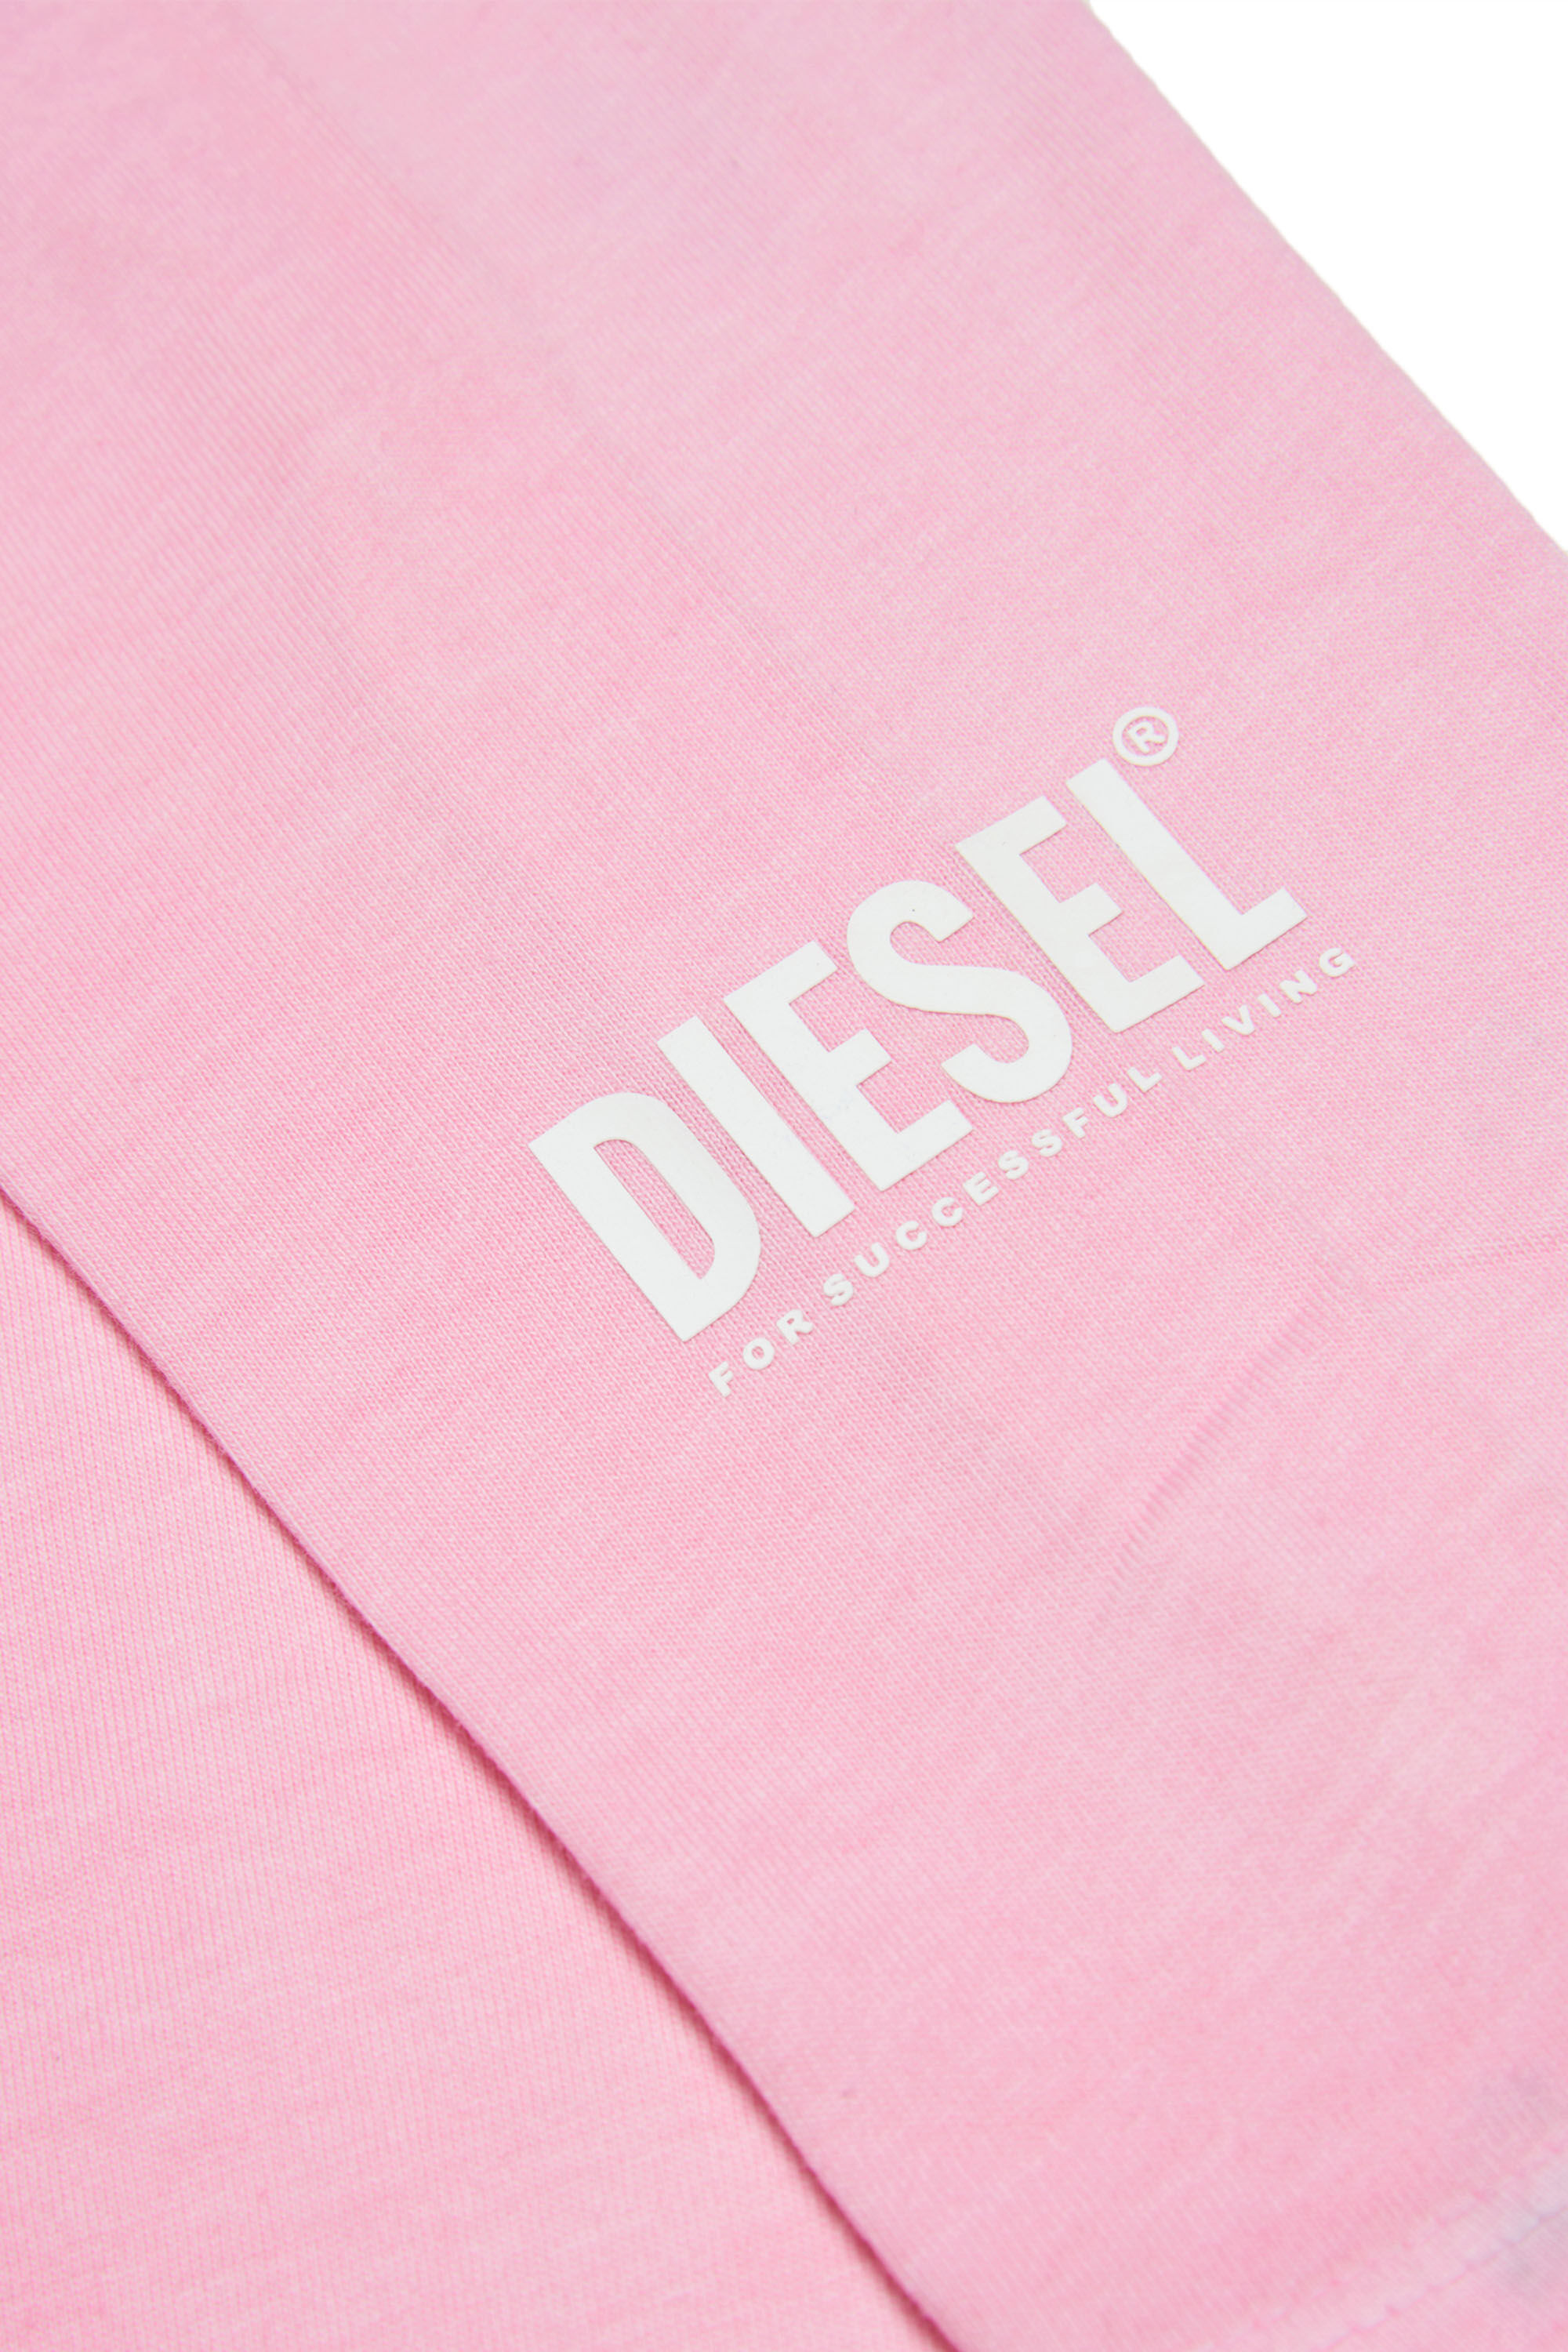 Diesel - POLORI, Pink/Green - Image 3